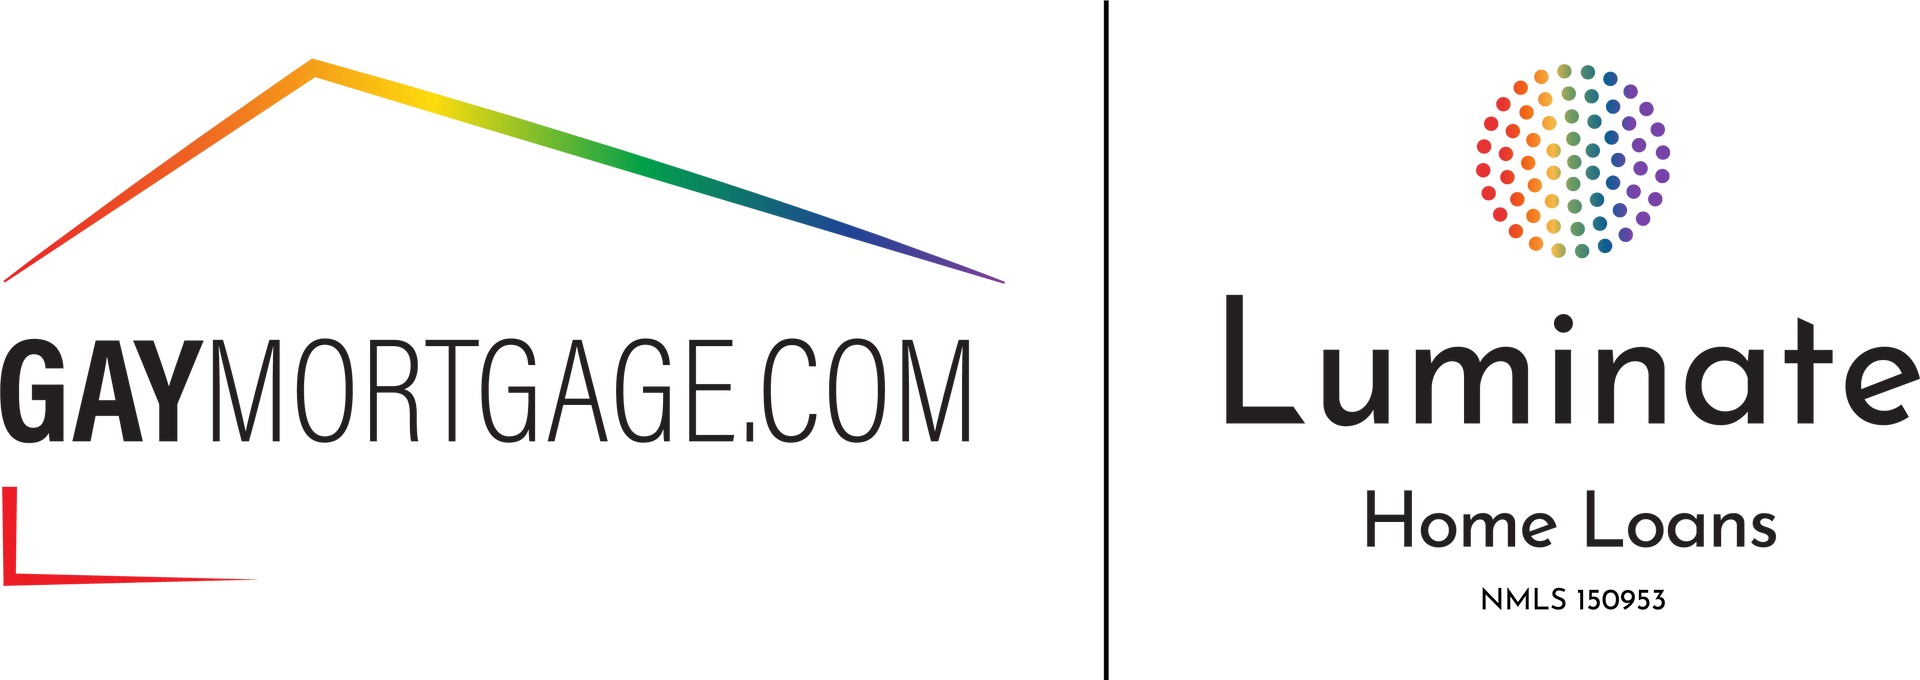 Gaymortgage.com and Luminate Home Loans logo